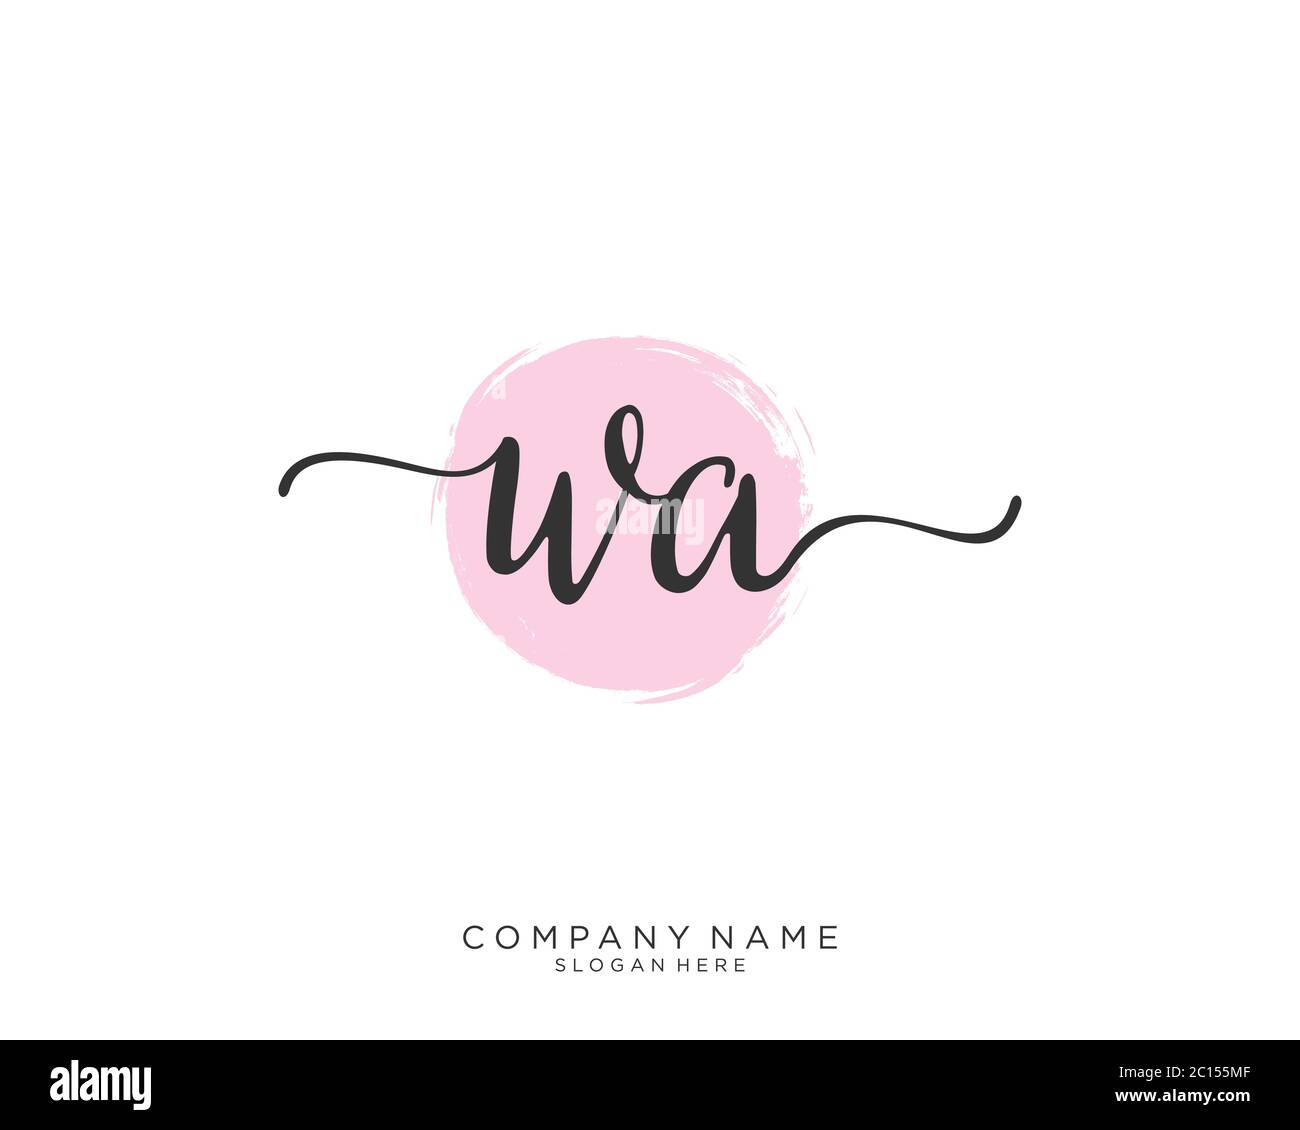 WA Initial handwriting logo vector Stock Vector